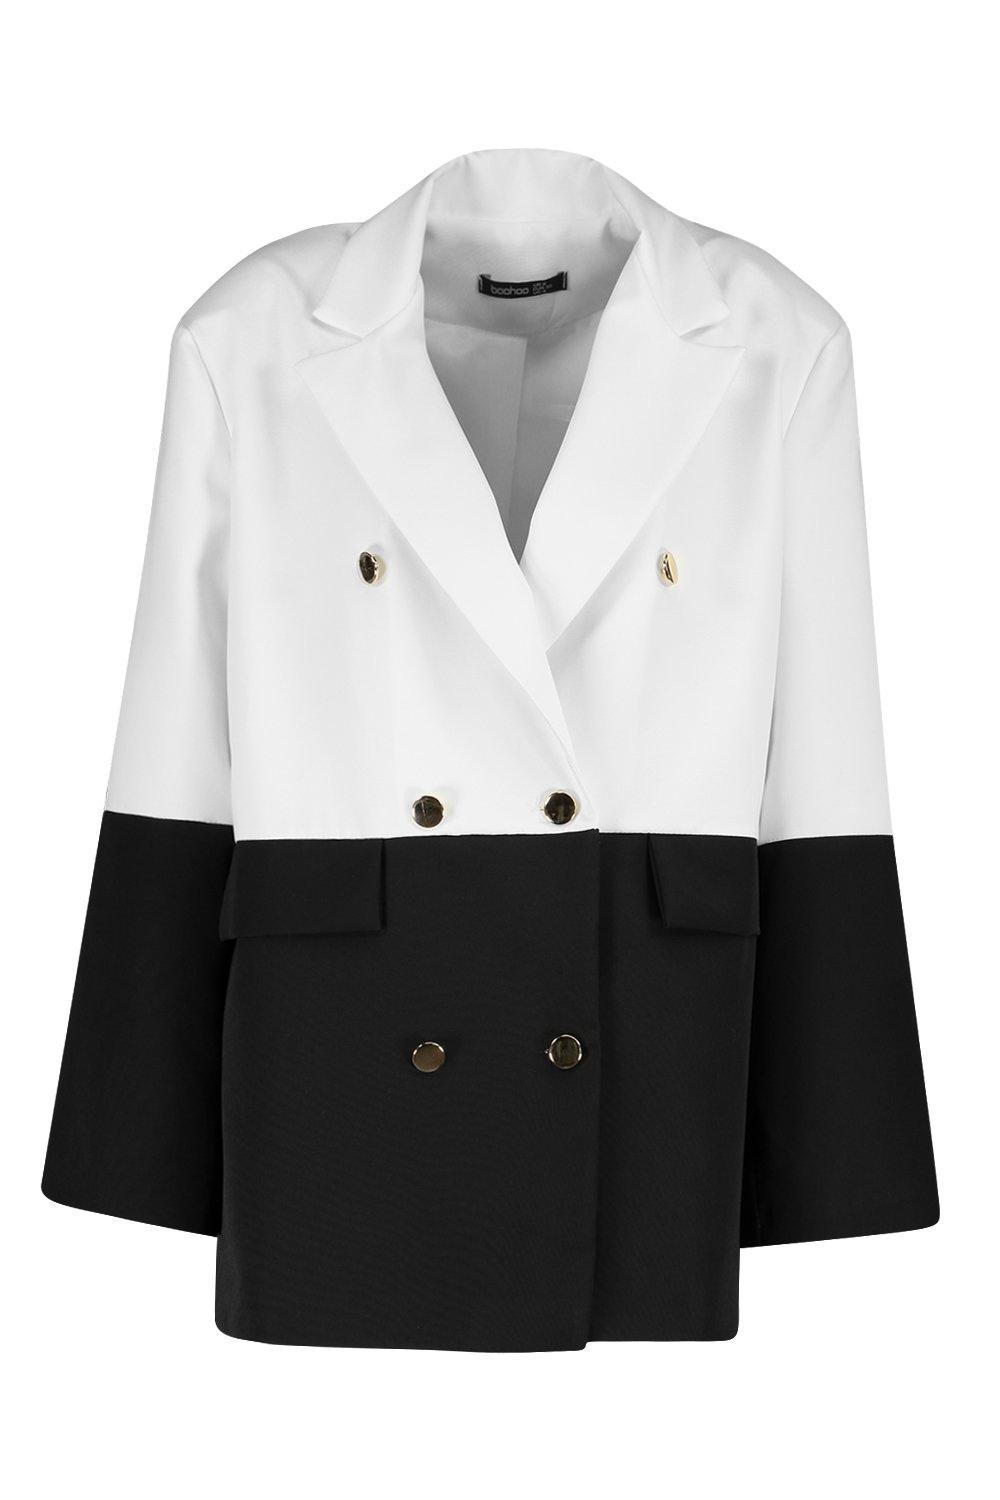 half black half white coat